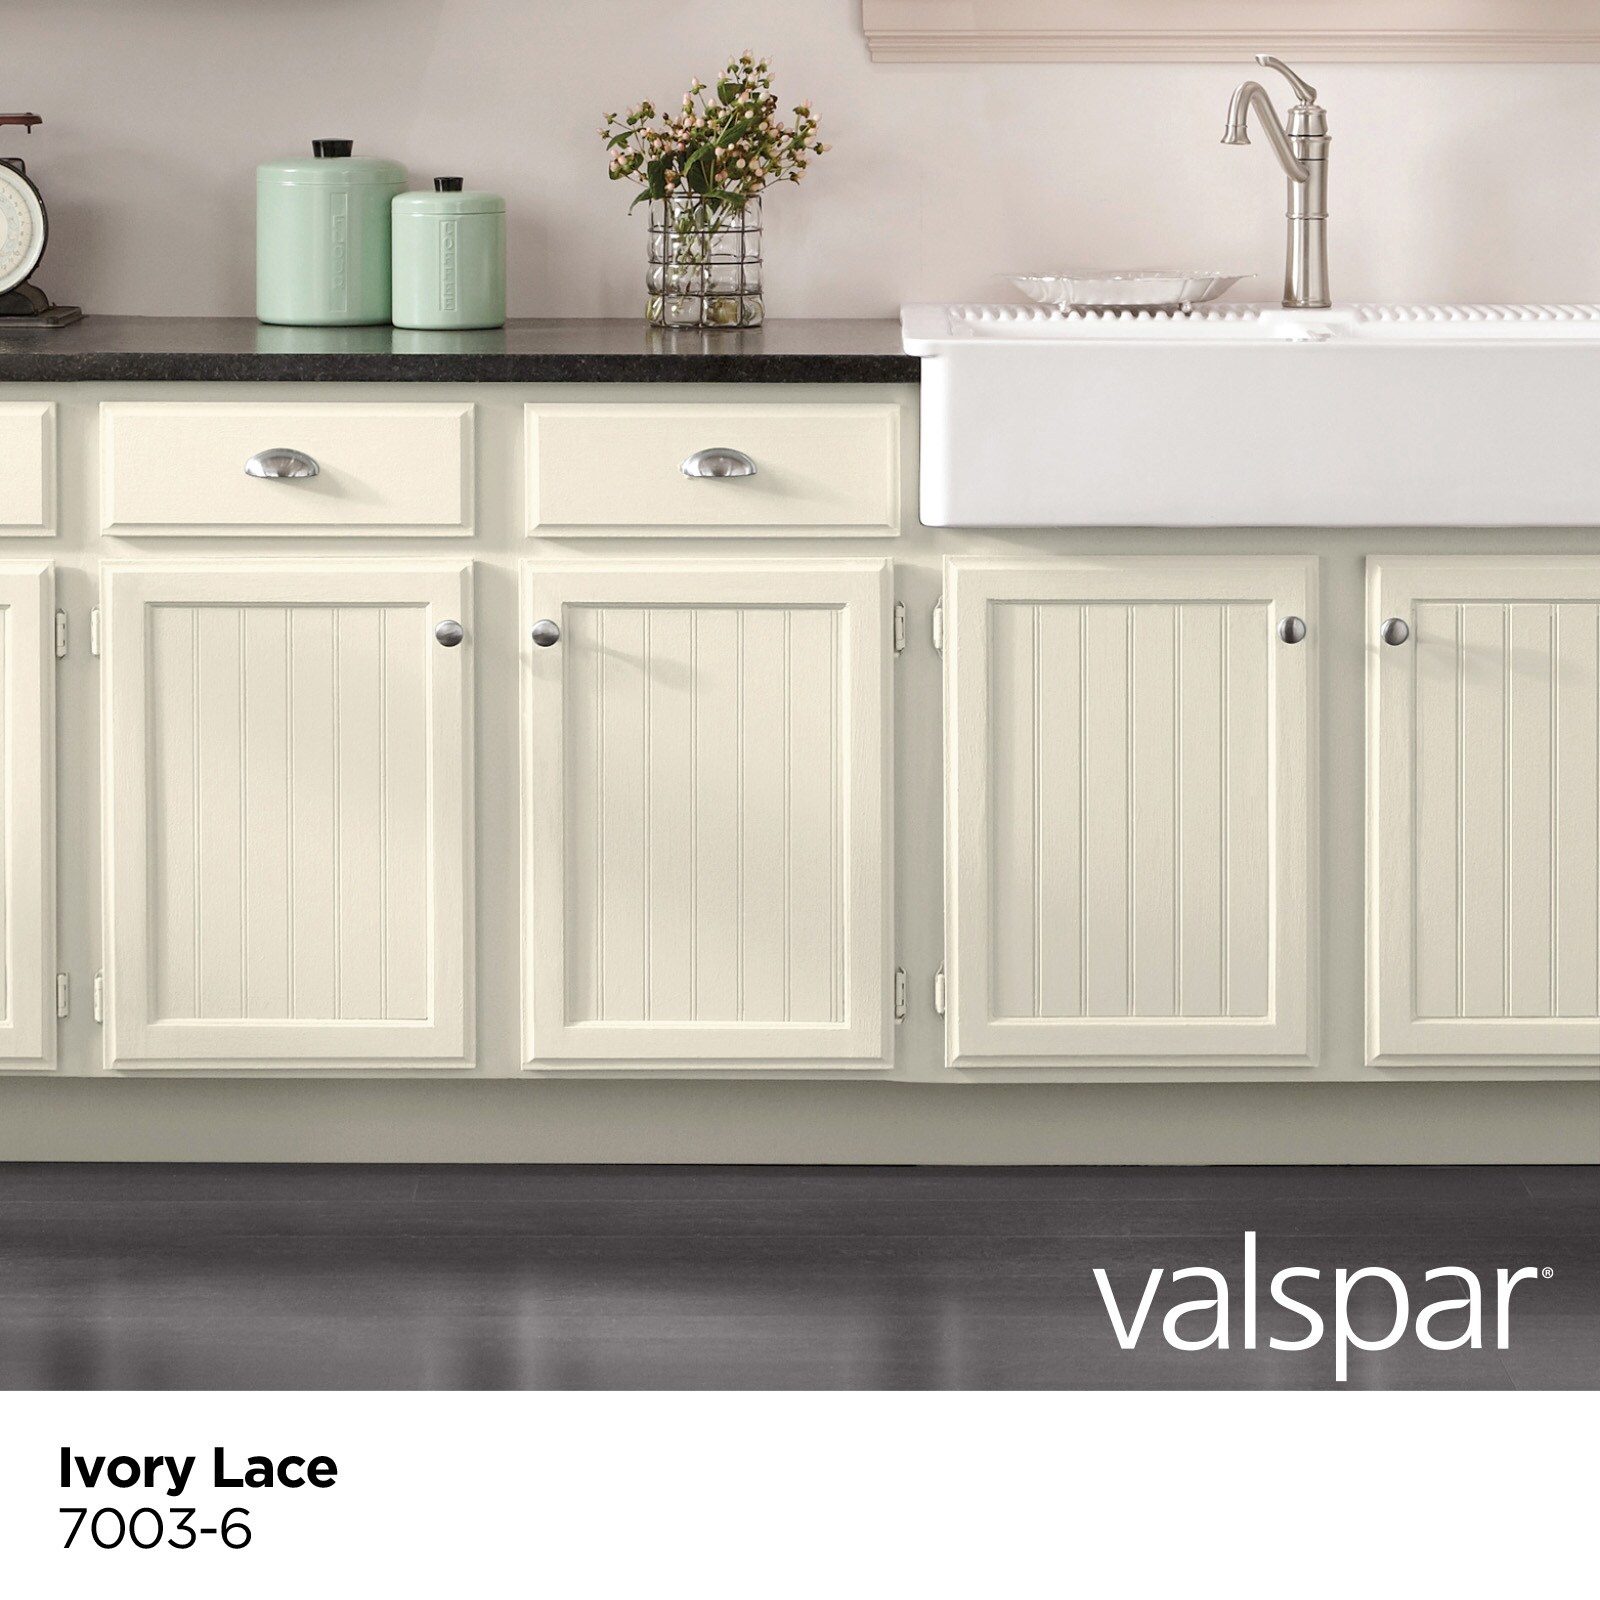 Valspar Ivory Lace 7003-6 Paint Sample (Half-Pint) at